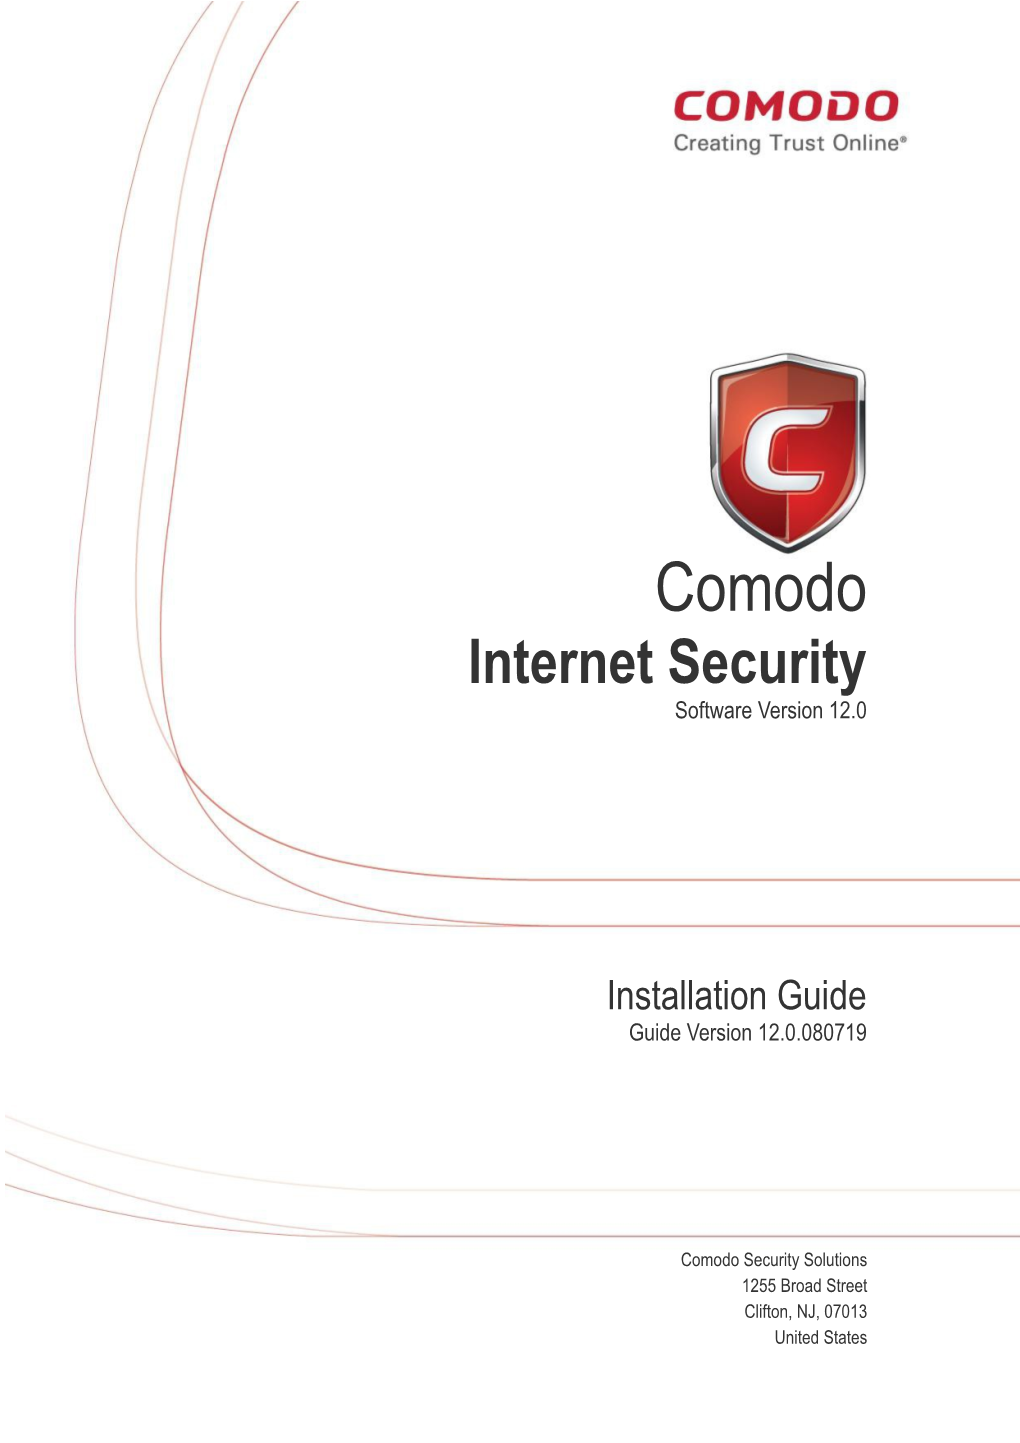 Comodo Internet Security Installation Guide | © 2019 Comodo Security Solutions Inc